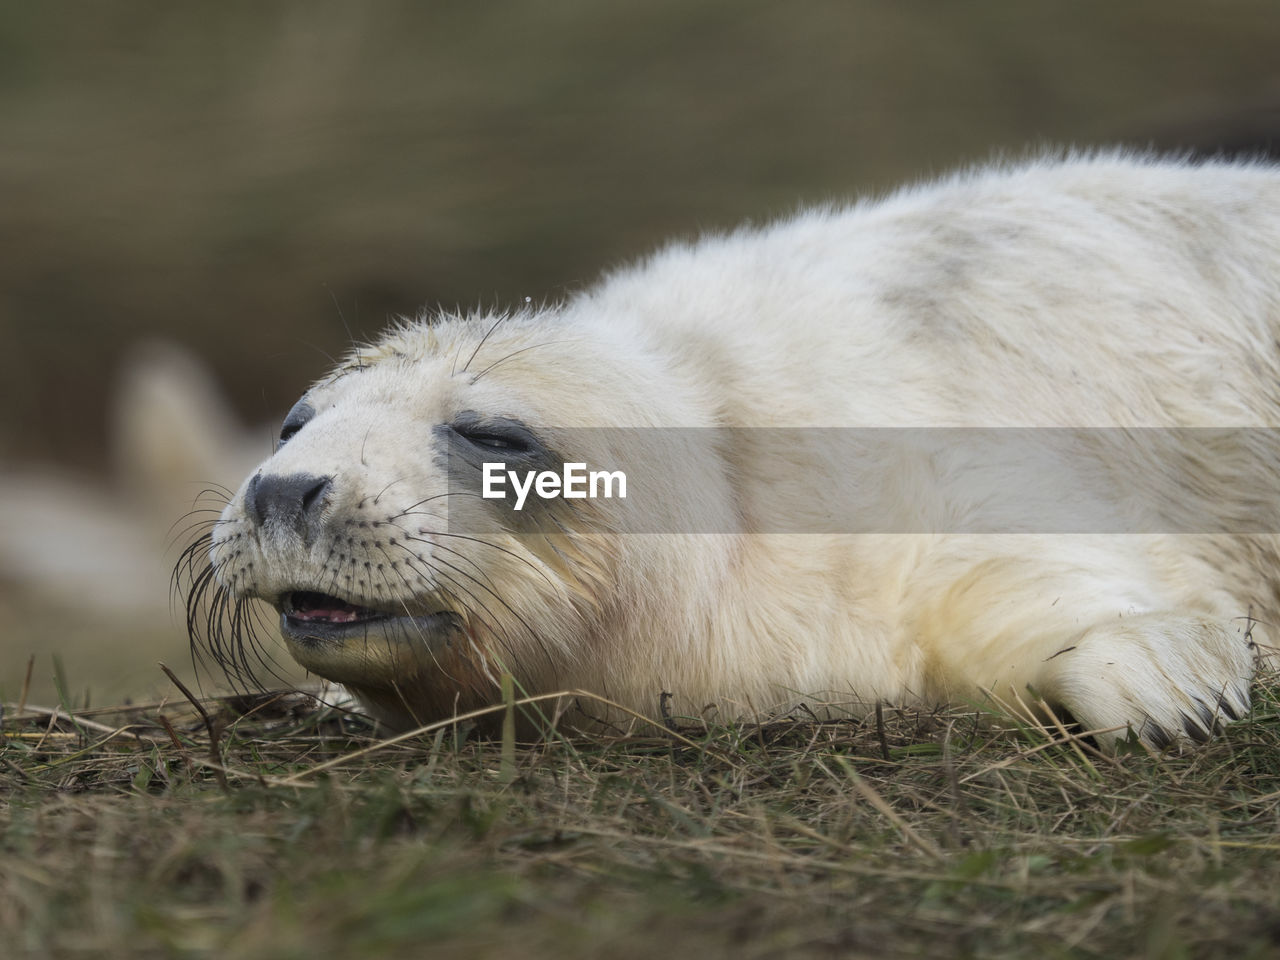 Close-up of grey seal sleeping on grassy field